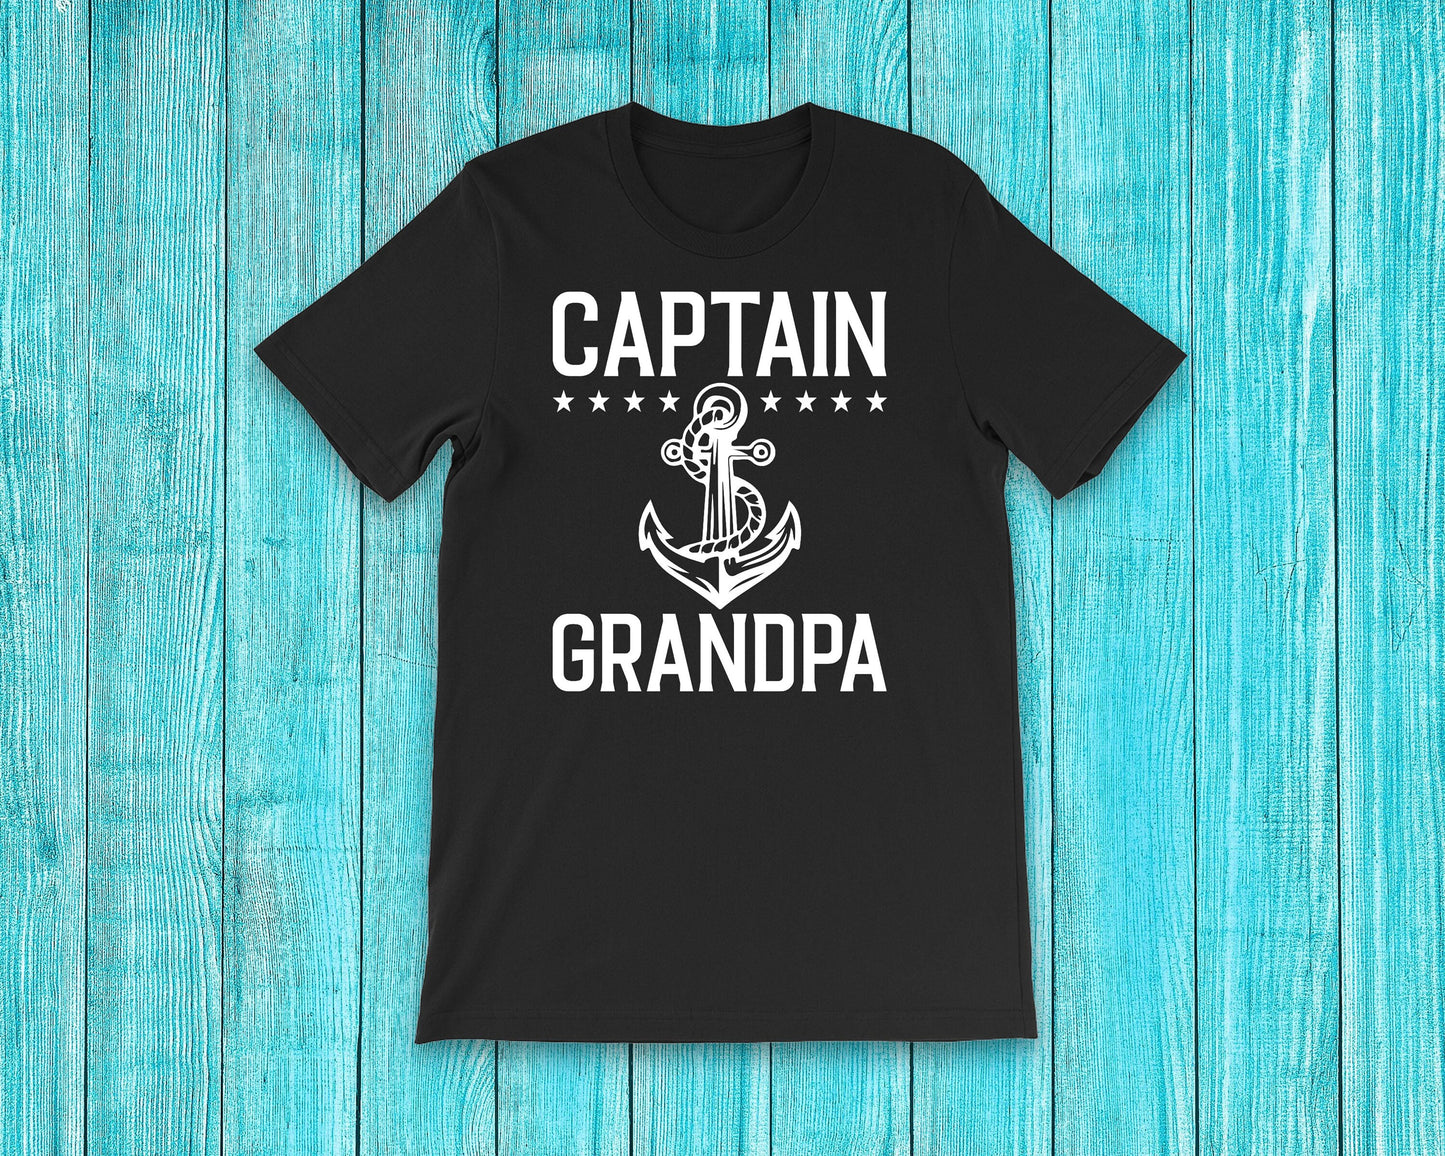 Captain Grandpa T-Shirt - Father's Day Shirt - Grandpa Shirt - Gifts for Dad - Dad Birthday Gift - Captain Shirt - Nautical Shirt